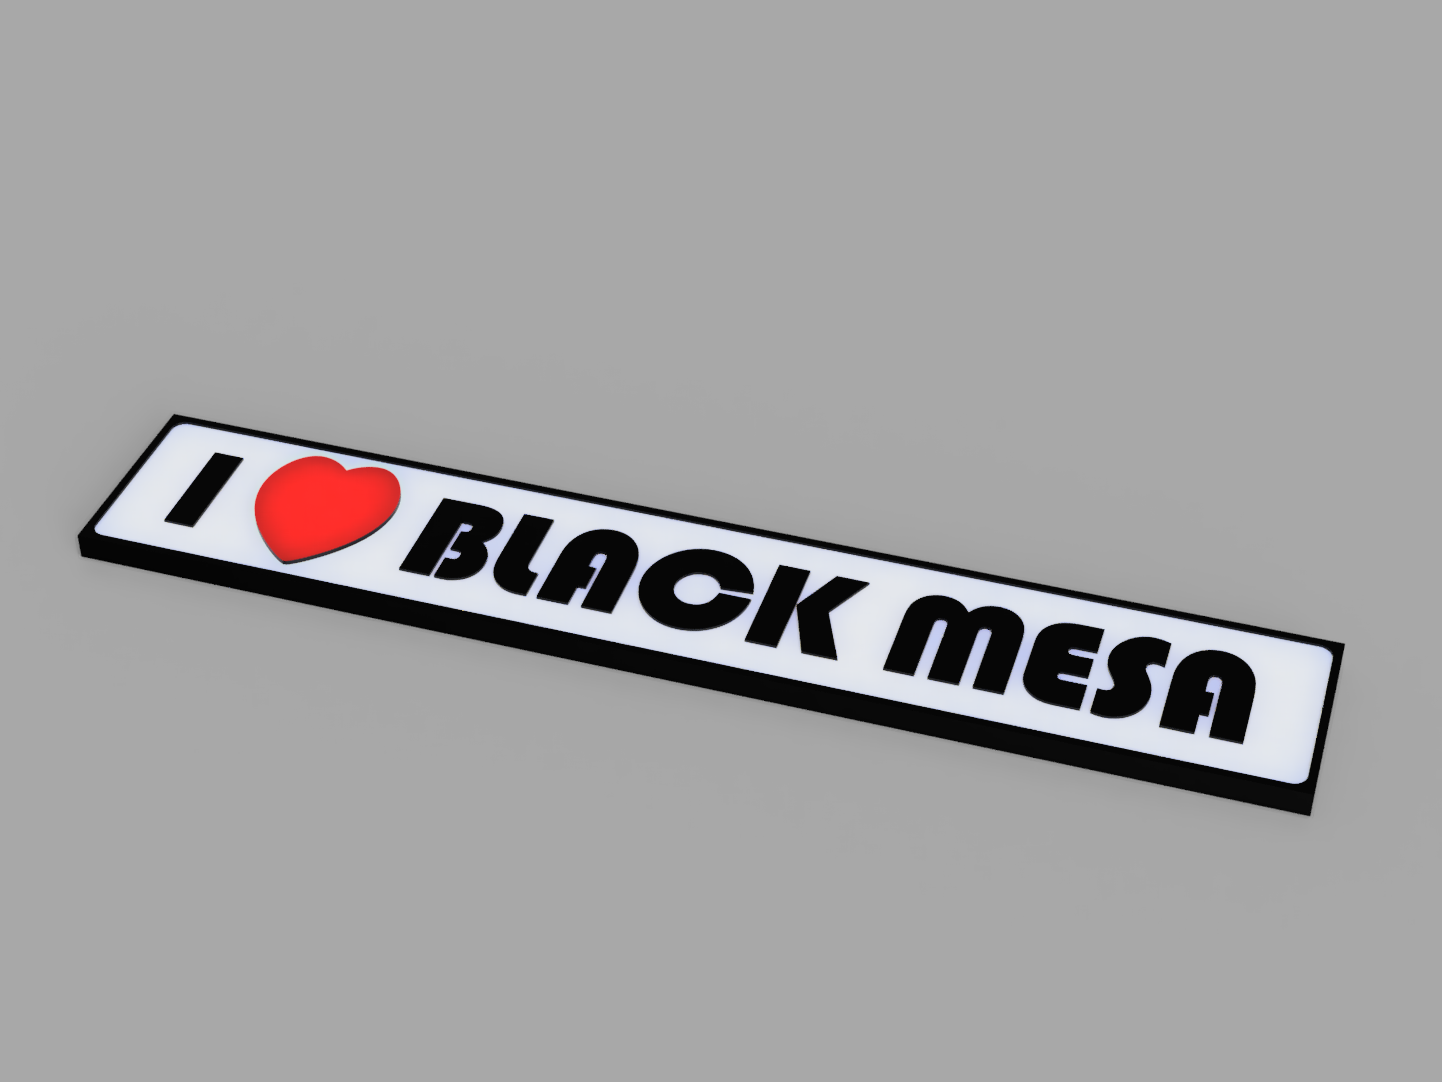 I Love Black Mesa Magnetic Plaque